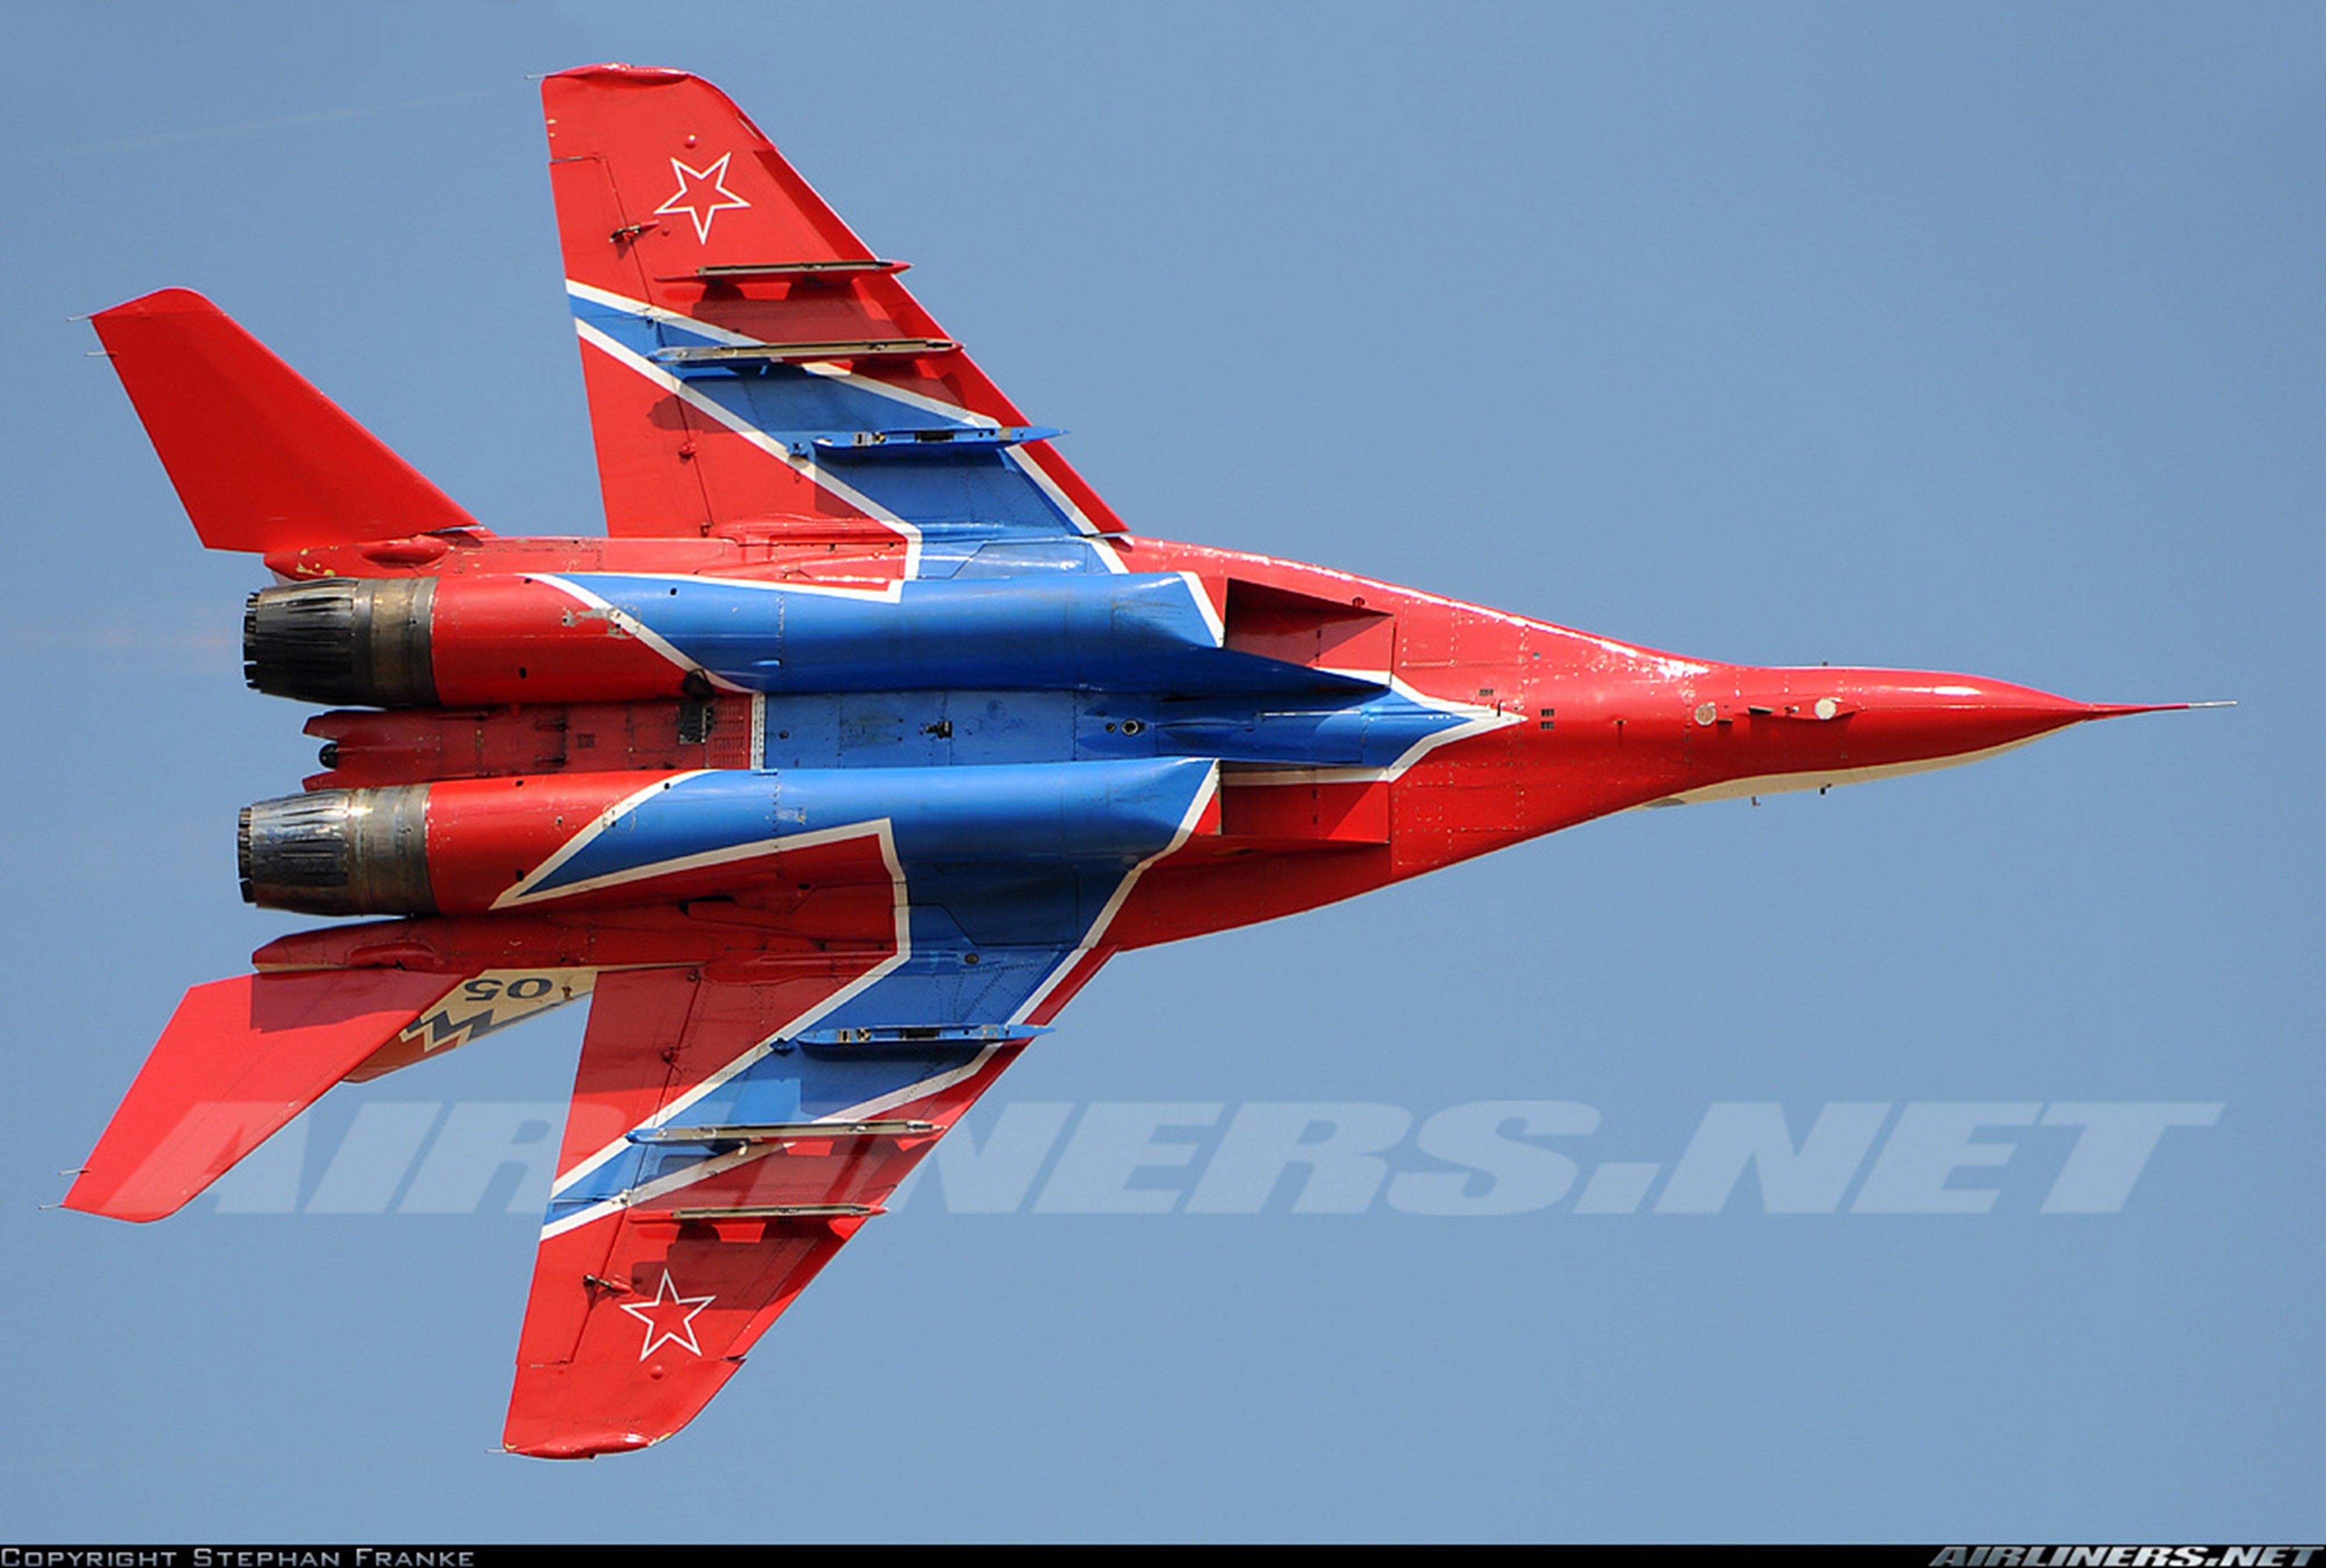 mikoyan, Gurevich, Mig, Russia, Jet, Fighter, Russian, Air, Force, Aircraft, War, Sky, Red, Star, 29ovt Wallpaper